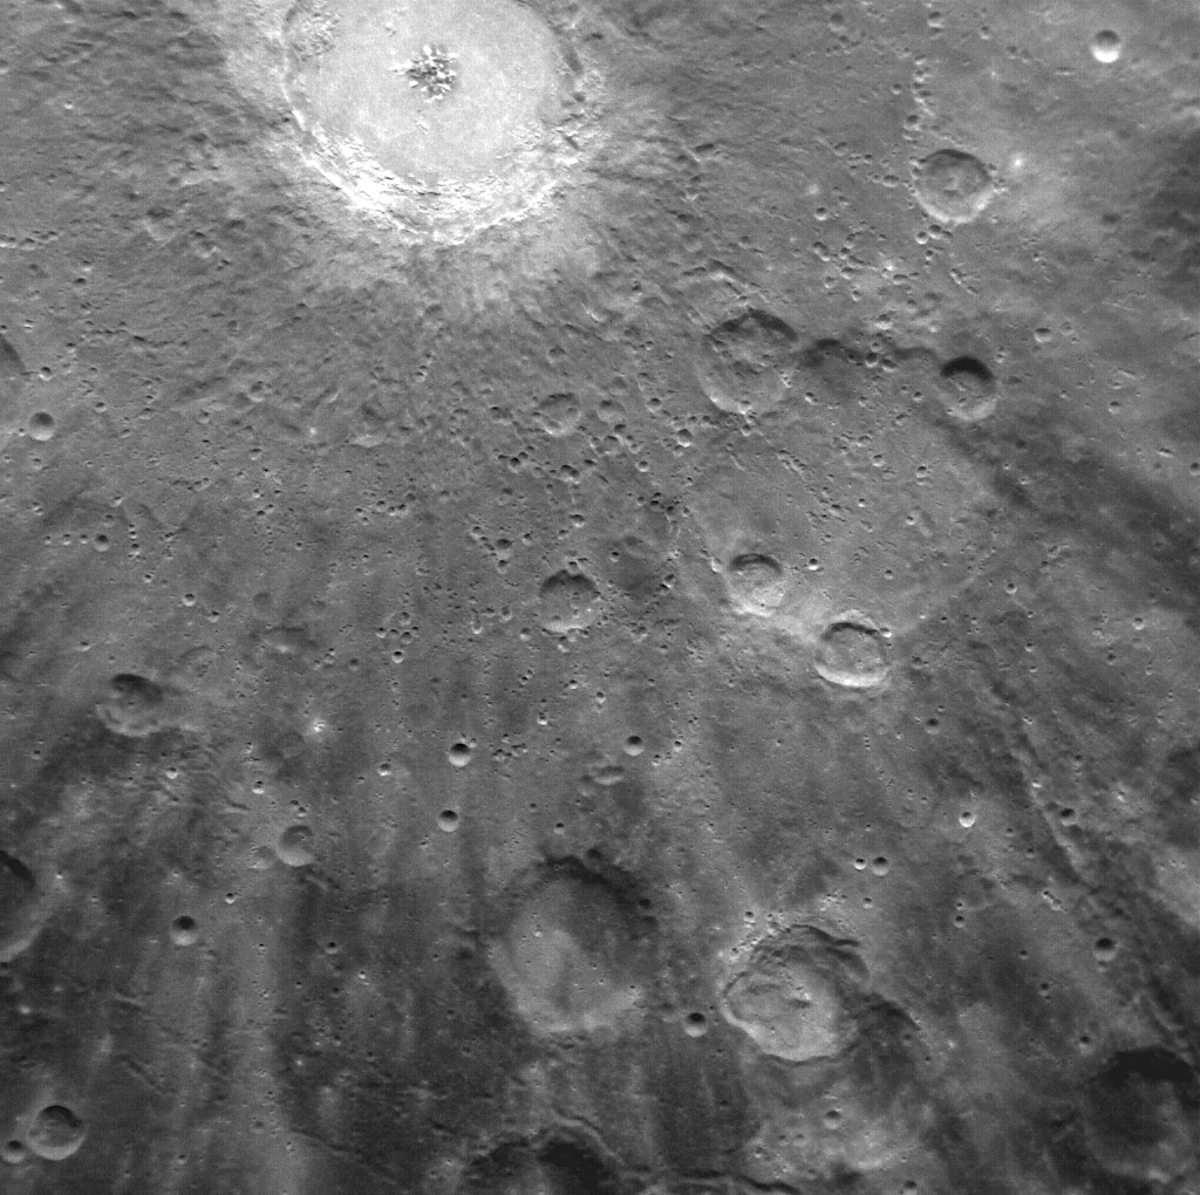 Кратеры меркурия. Меркурий кратеры. Меркурий Планета кратеры. Браманте кратер на Меркурии. Планета меркурийкраторы.